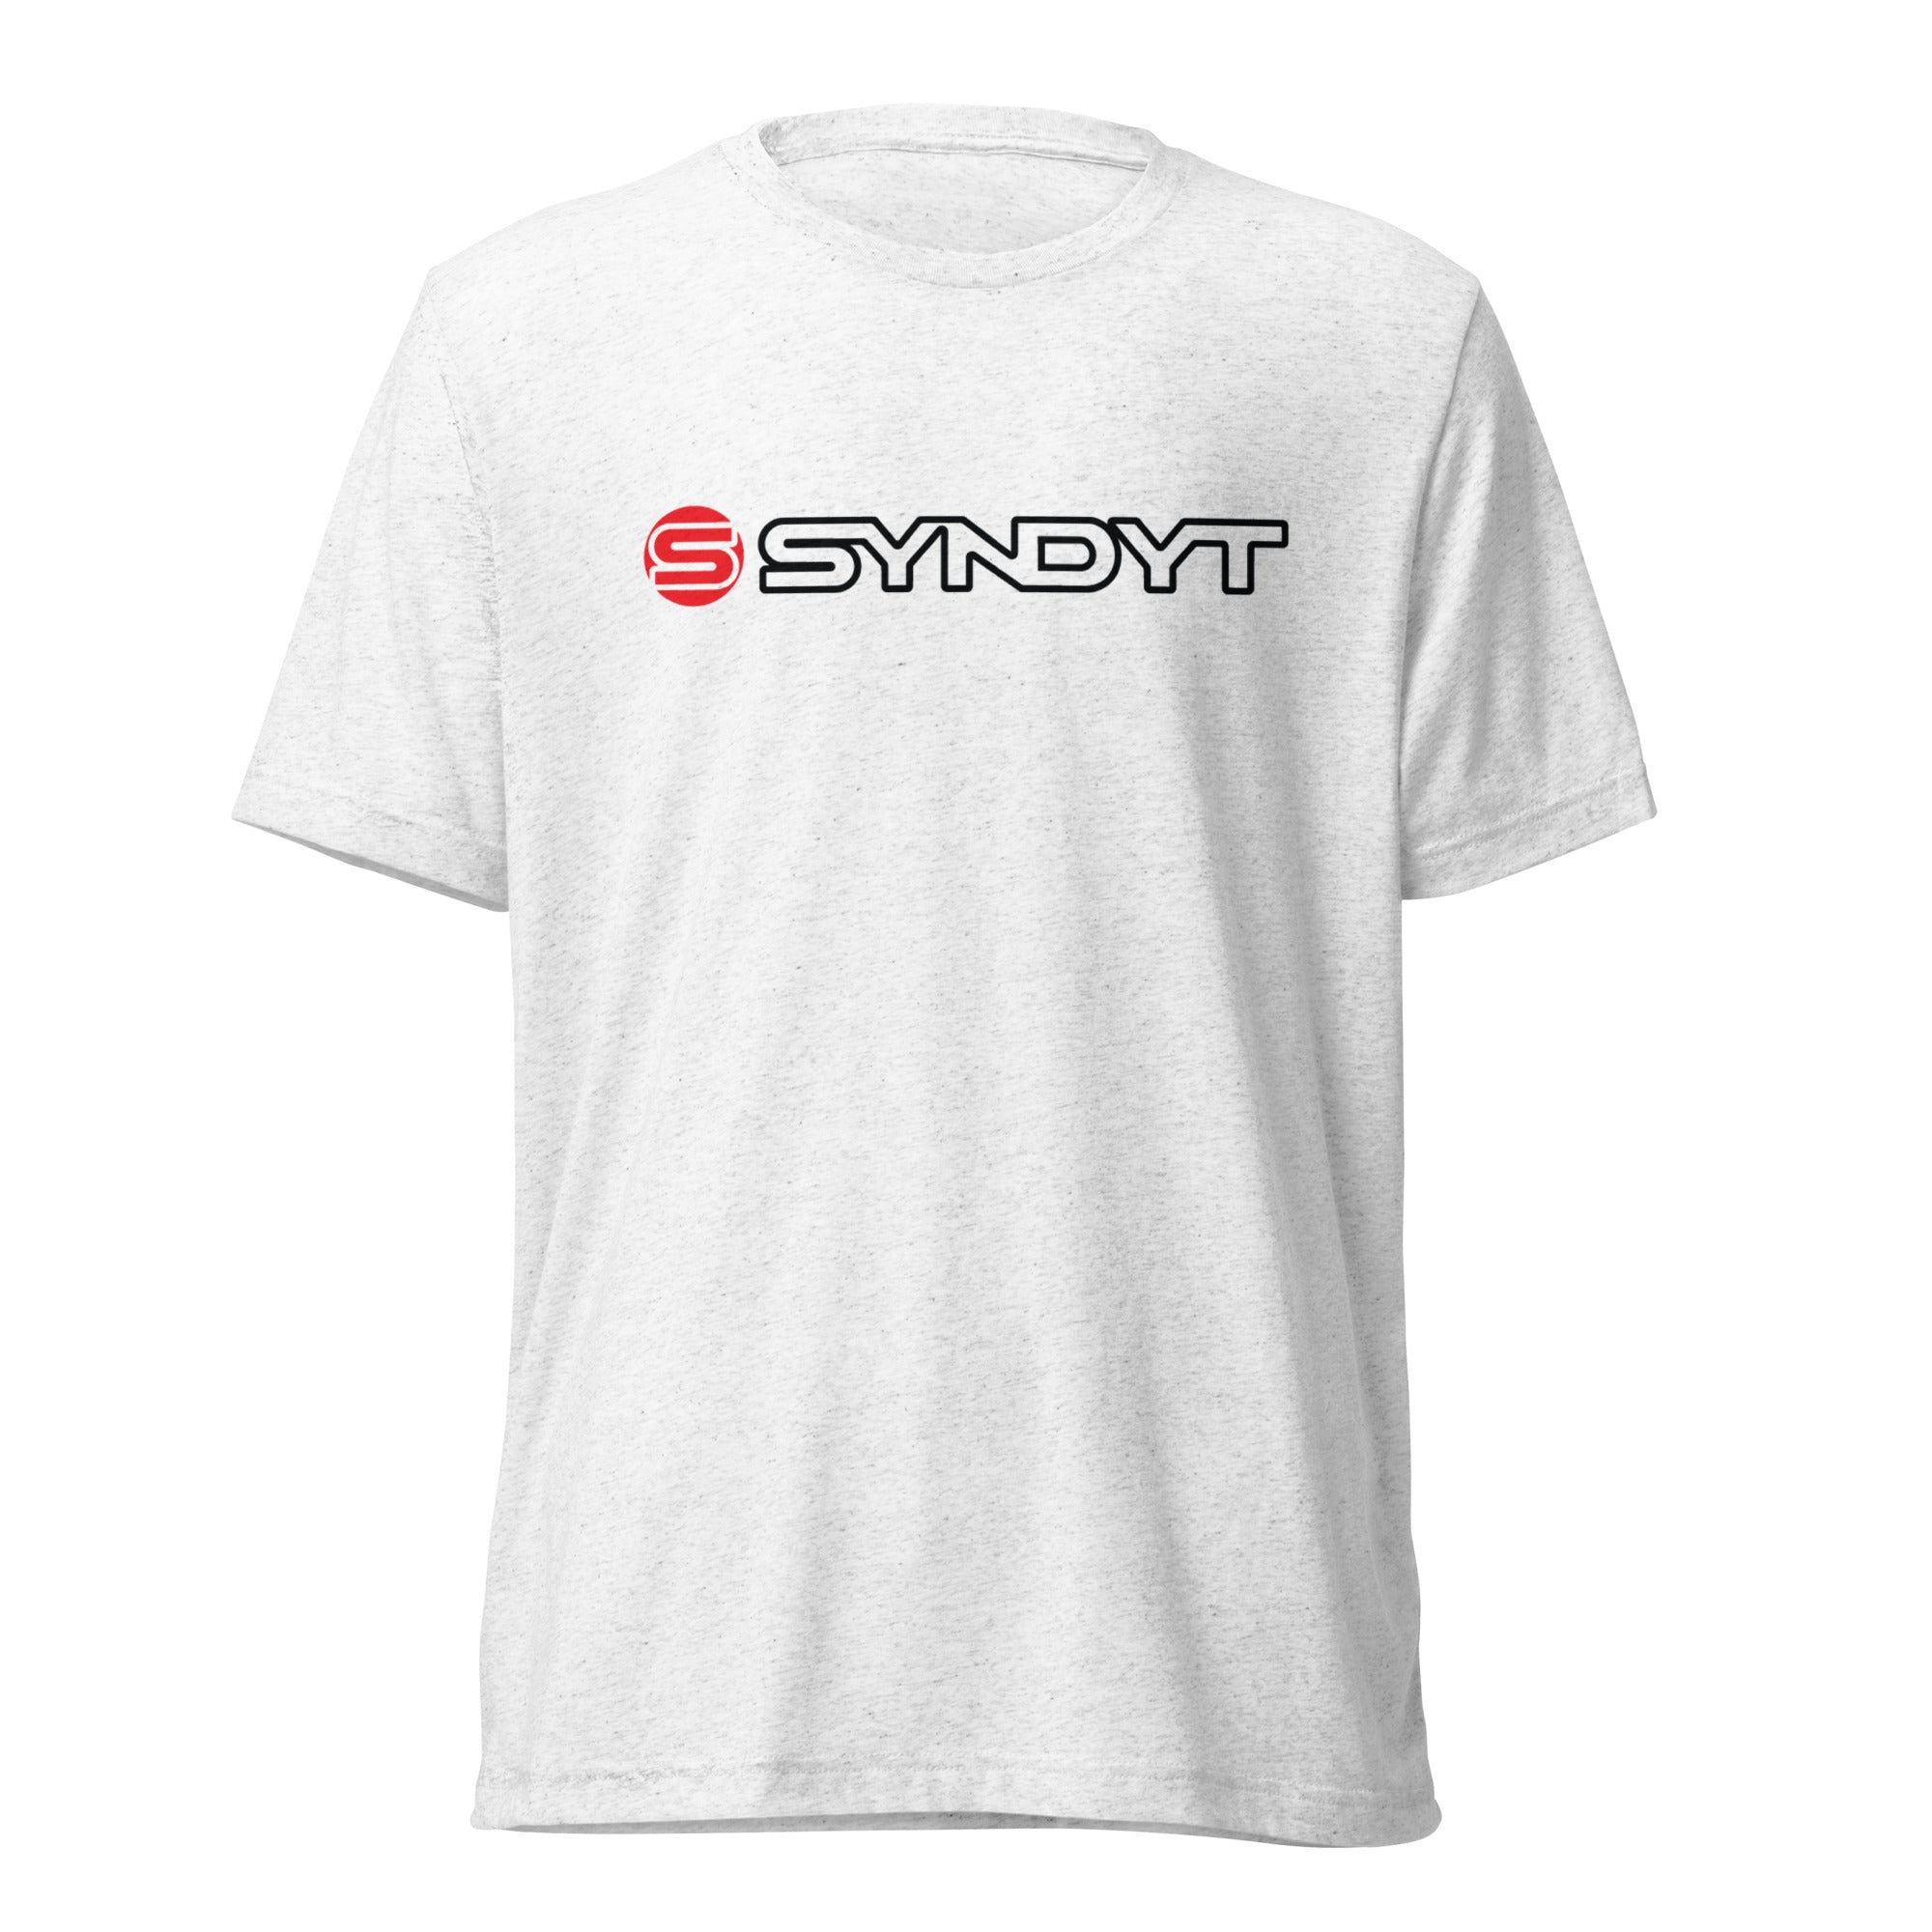 Syndyt Short Sleeve T-Shirt